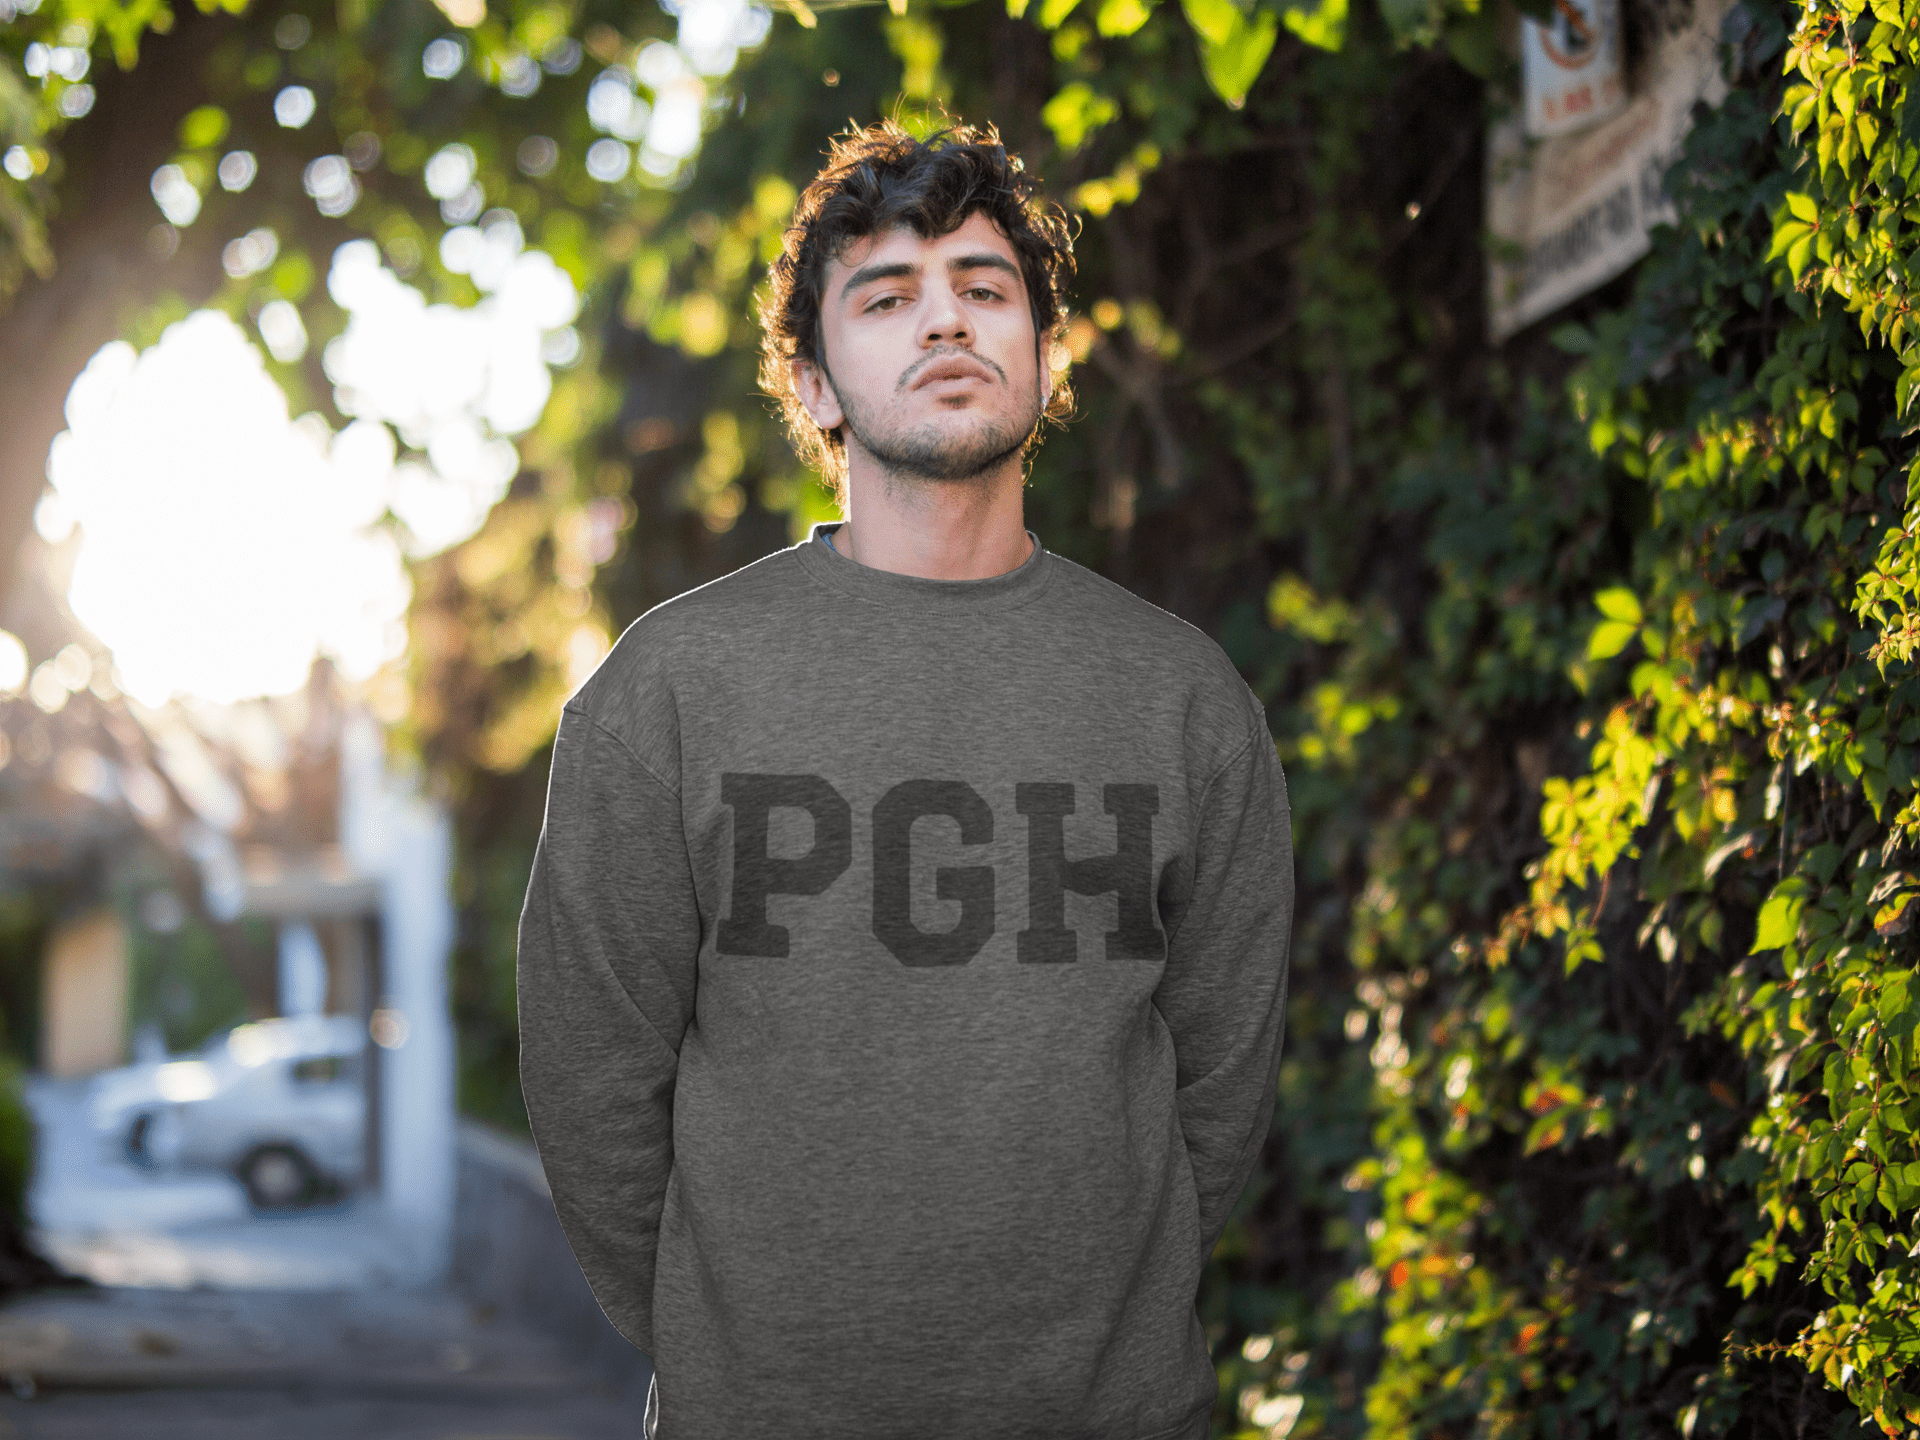 City Shirt Co PGH Pittsburgh Crewneck Sweatshirt